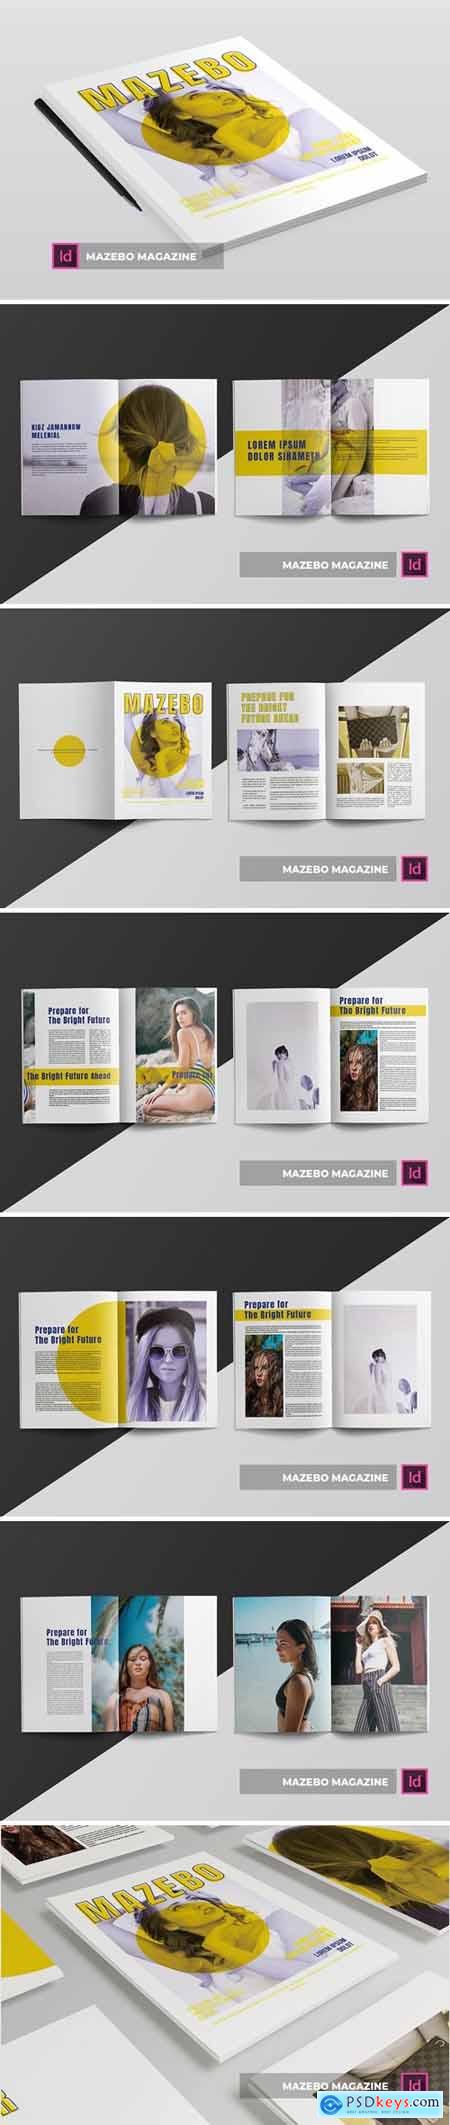 Mazebo - Magazine Template